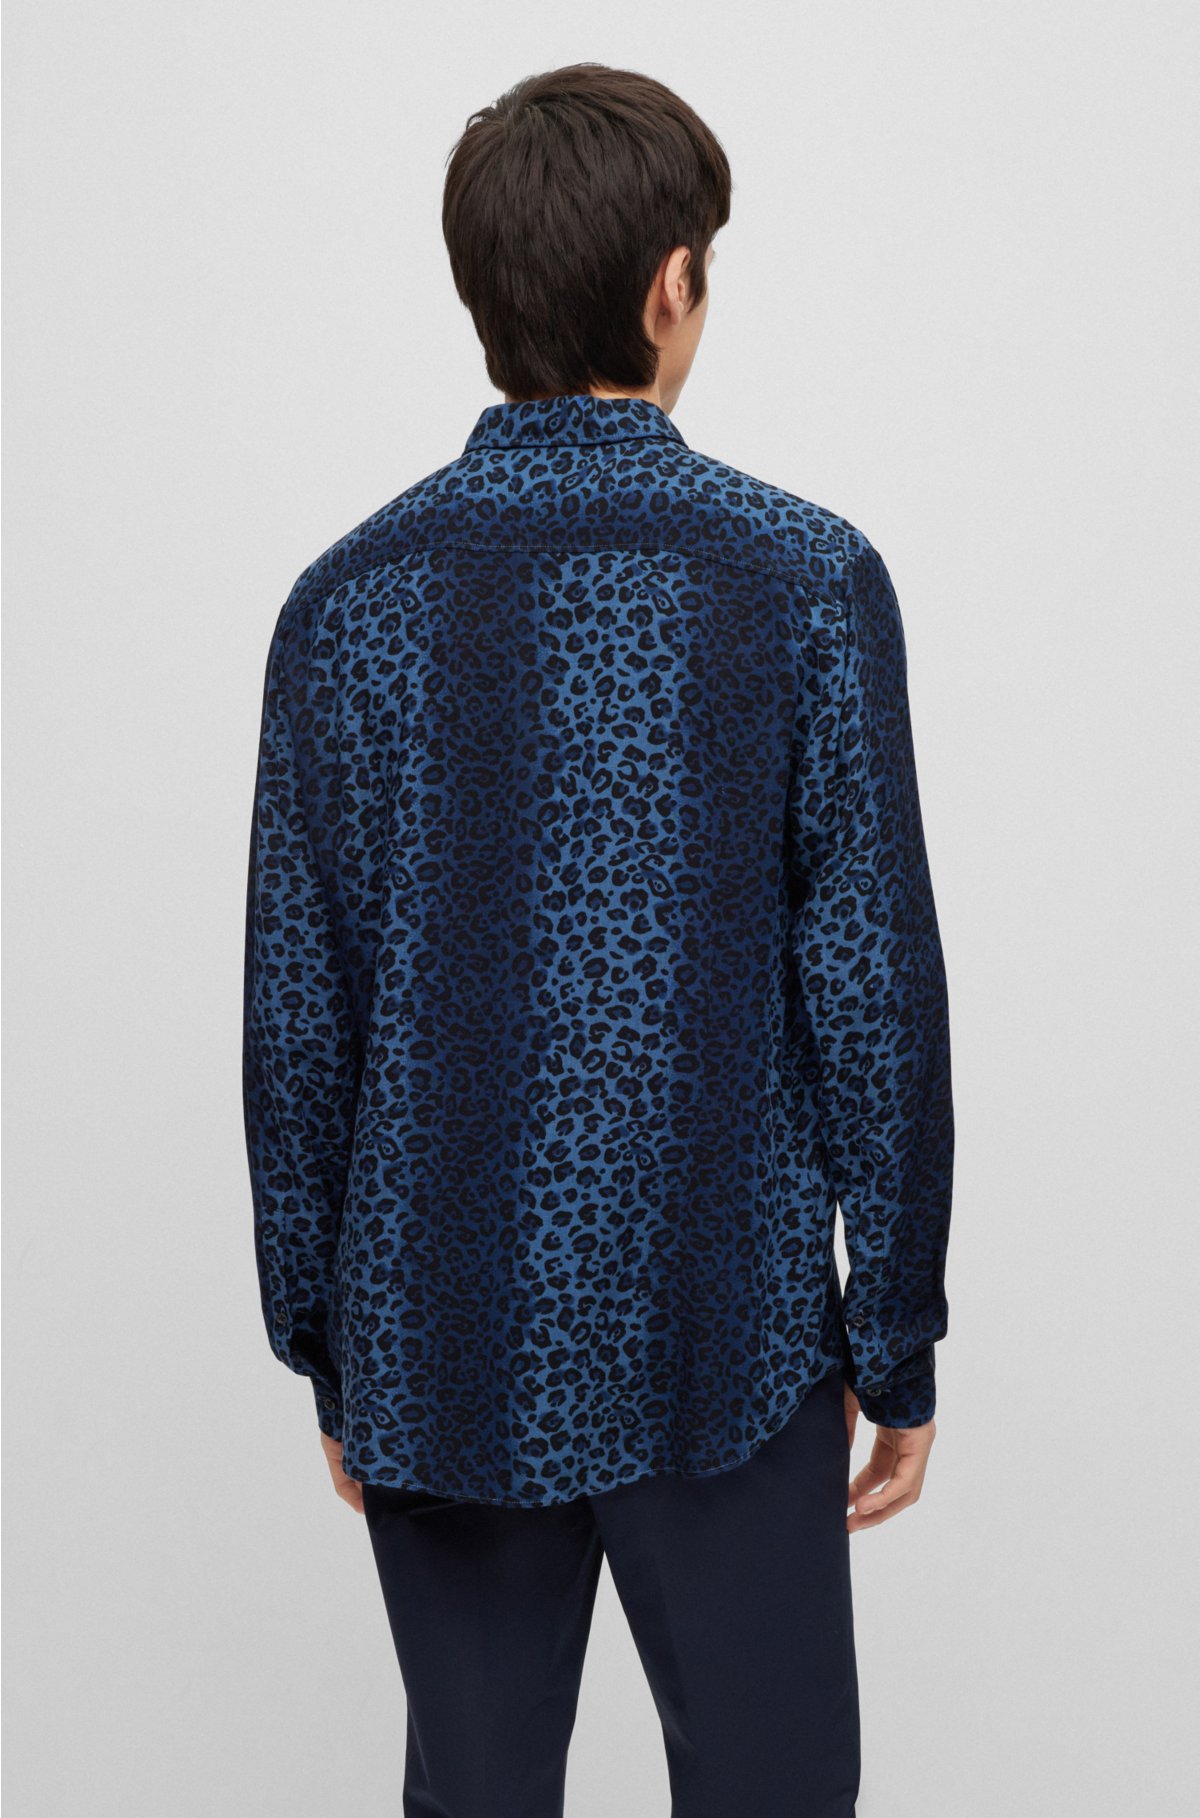 Hugo Boss Simiss Silk Leopard Print Pants, $245